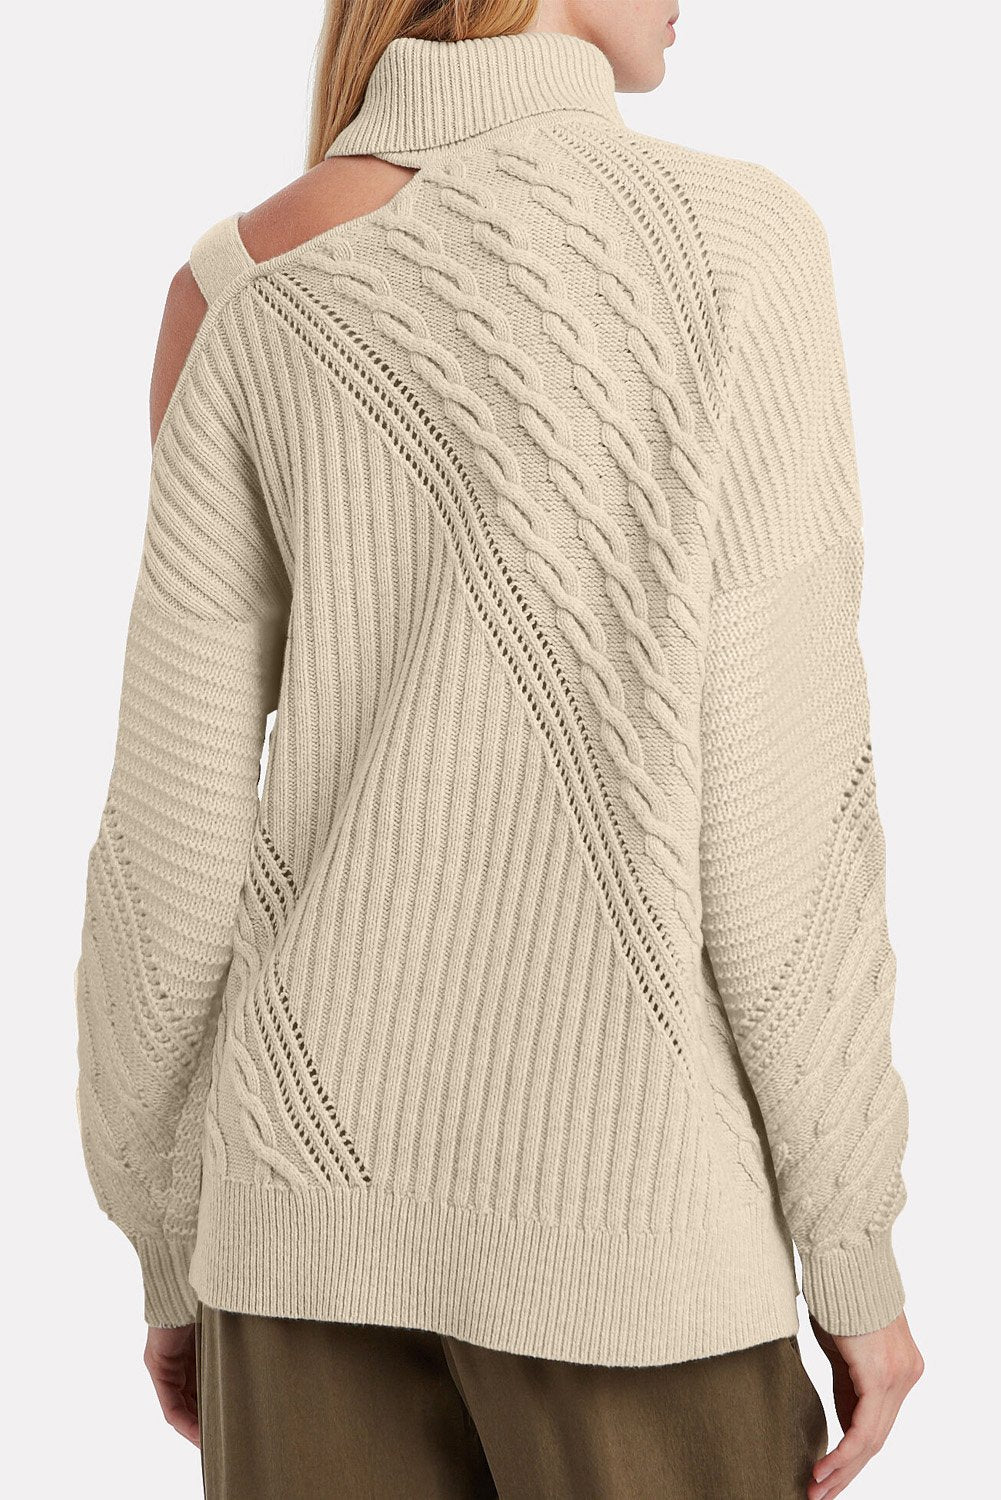 Strapped Cut Out Shoulder Turtleneck Sweater